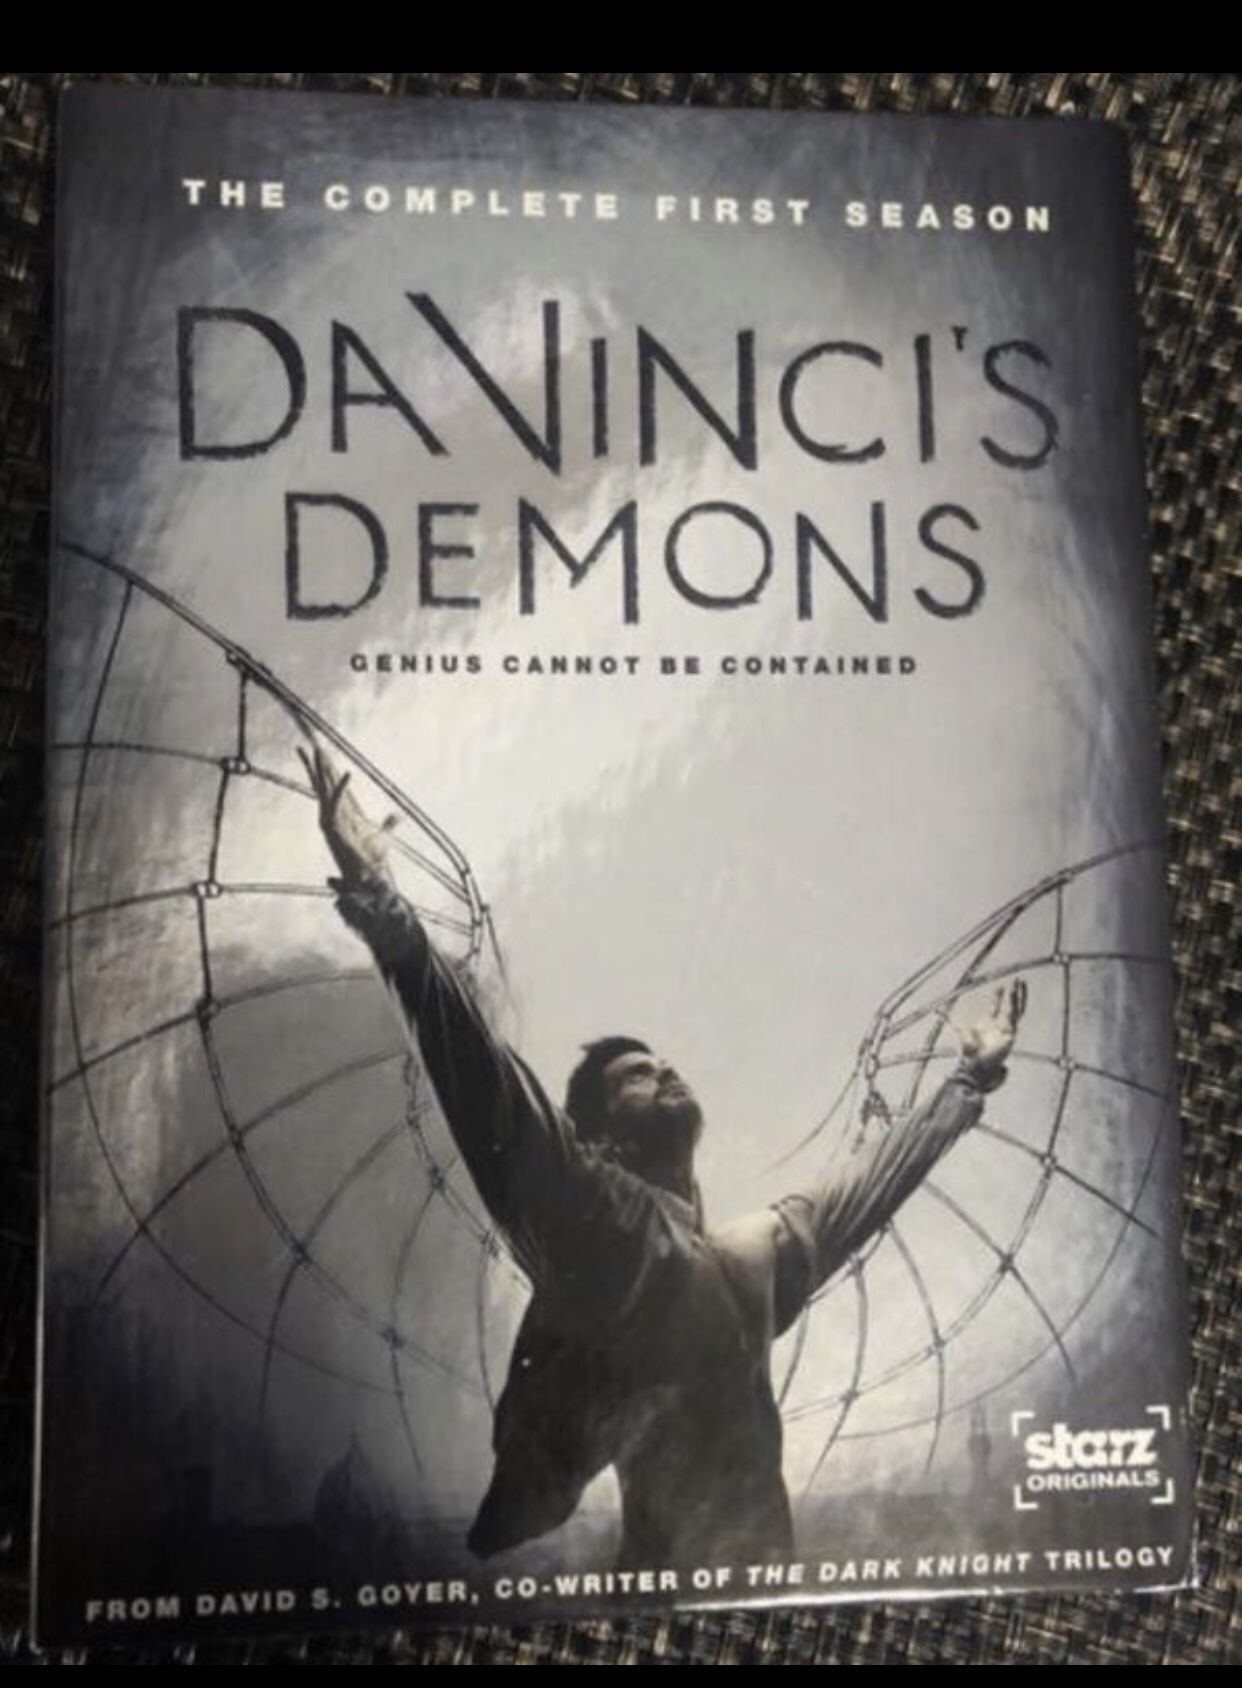 DA VINCI’S DEMONS (seasons 1-2 complete)